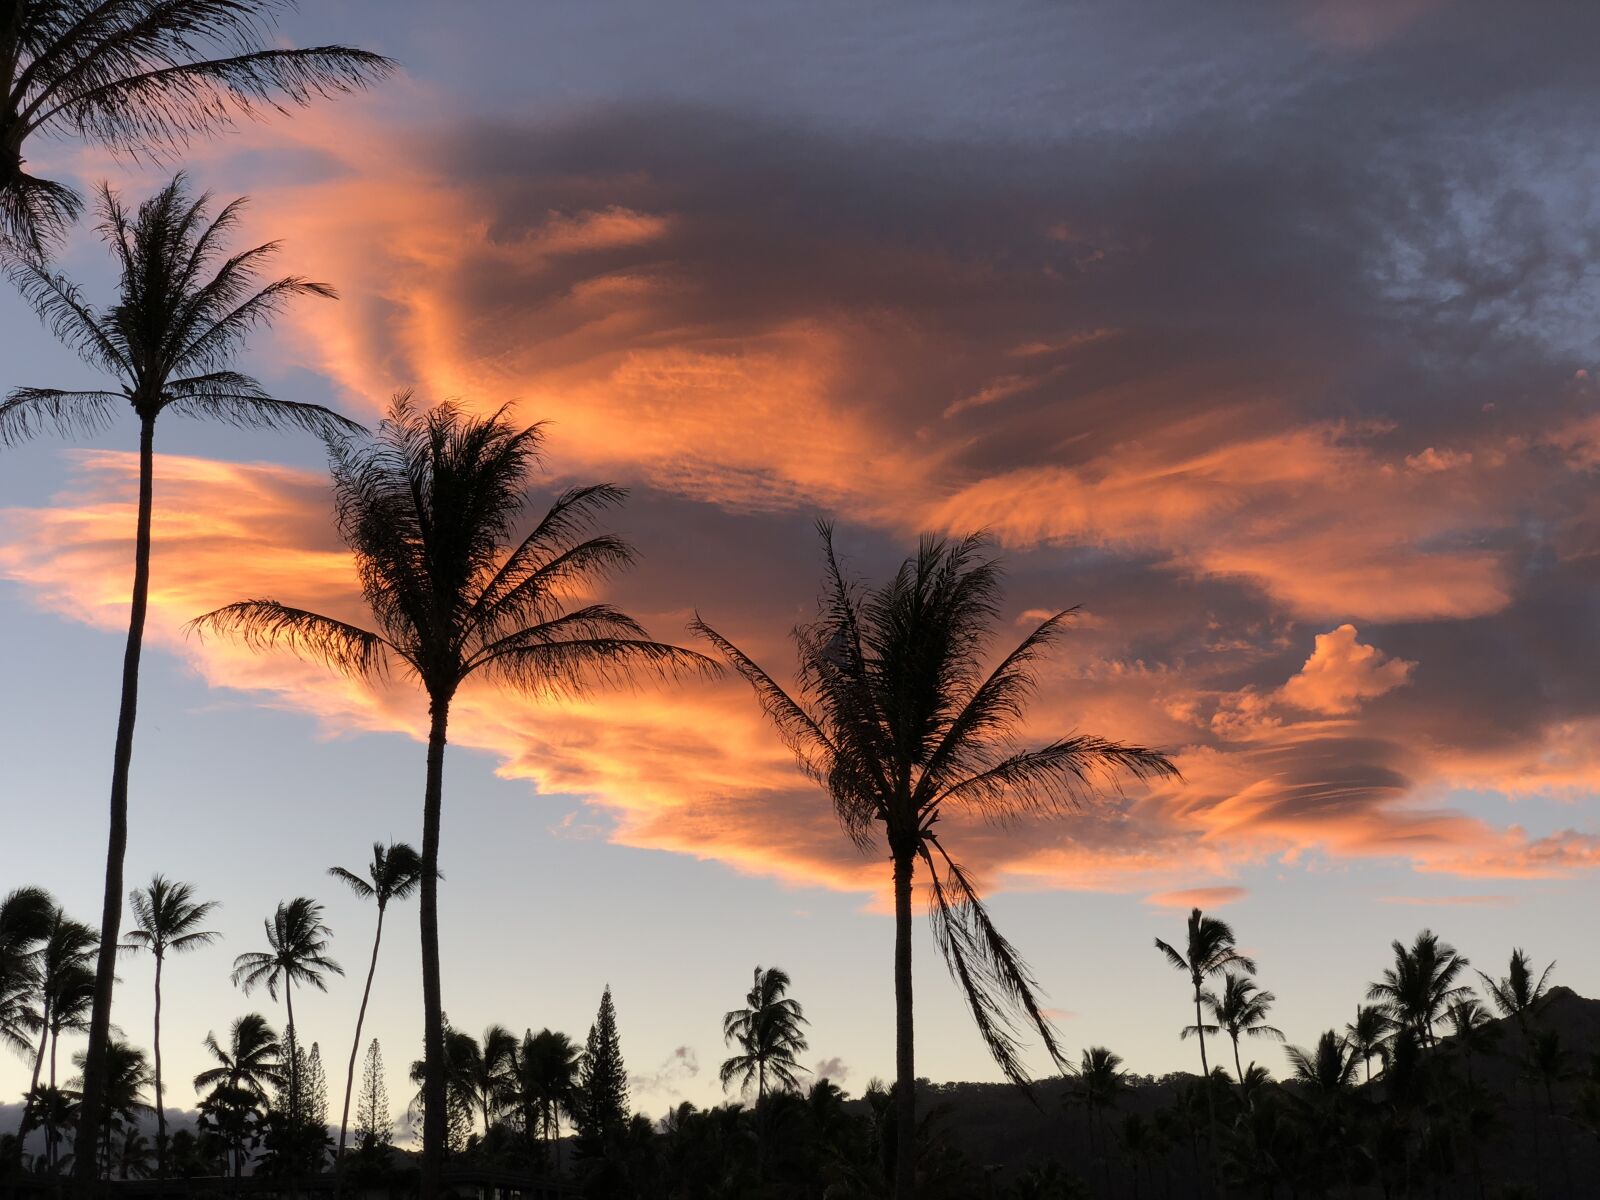 iPhone X back dual camera 6mm f/2.4 sample photo. Sky, hawaii, palm trees photography